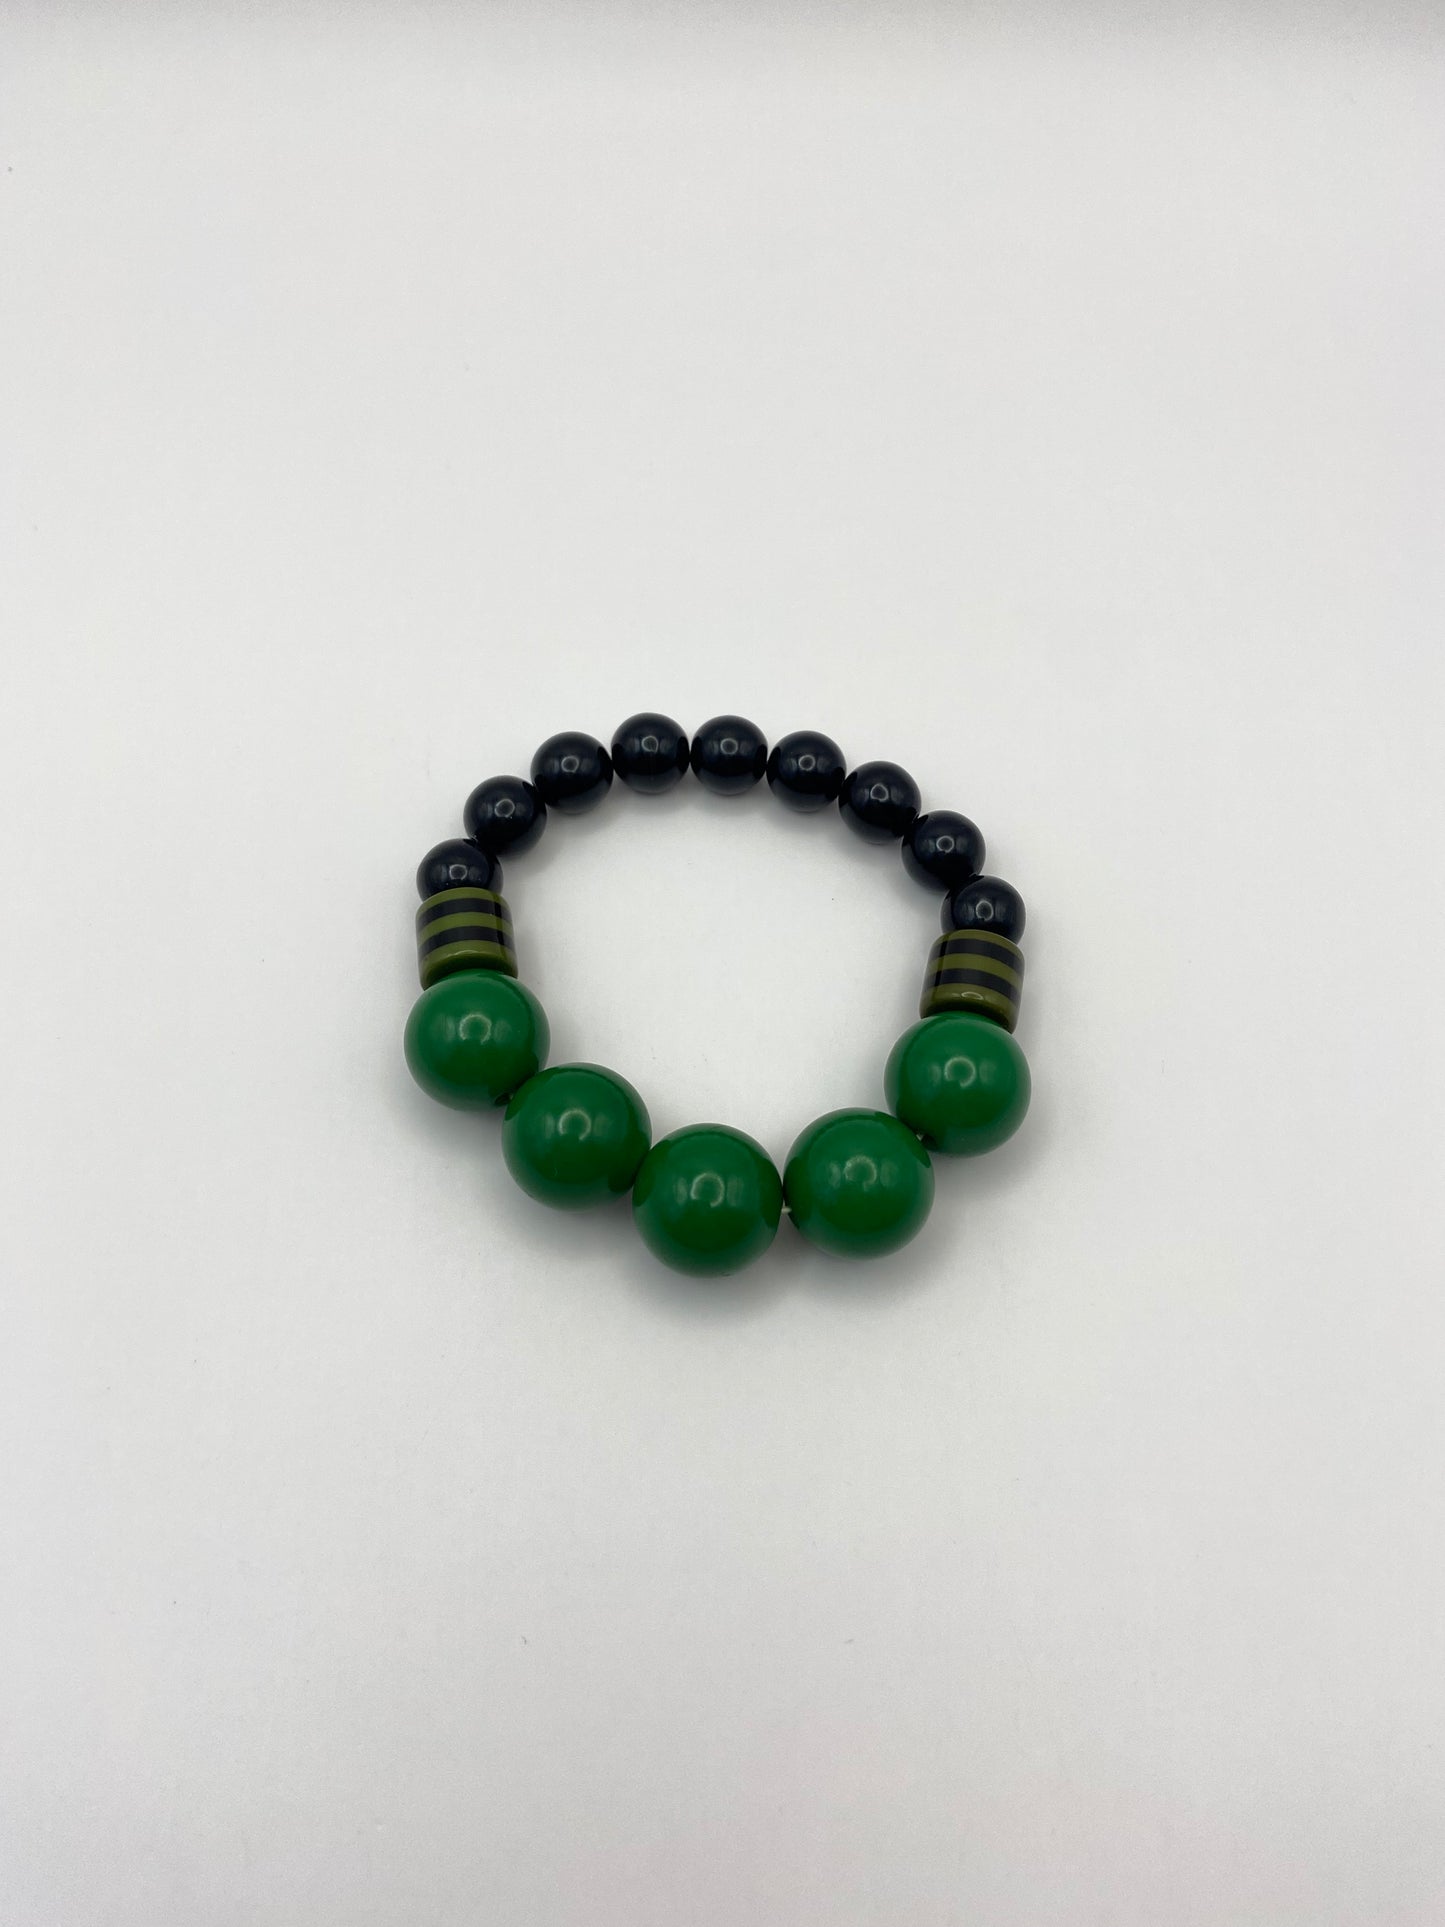 Elegant Bracelet with Black and Green Beads